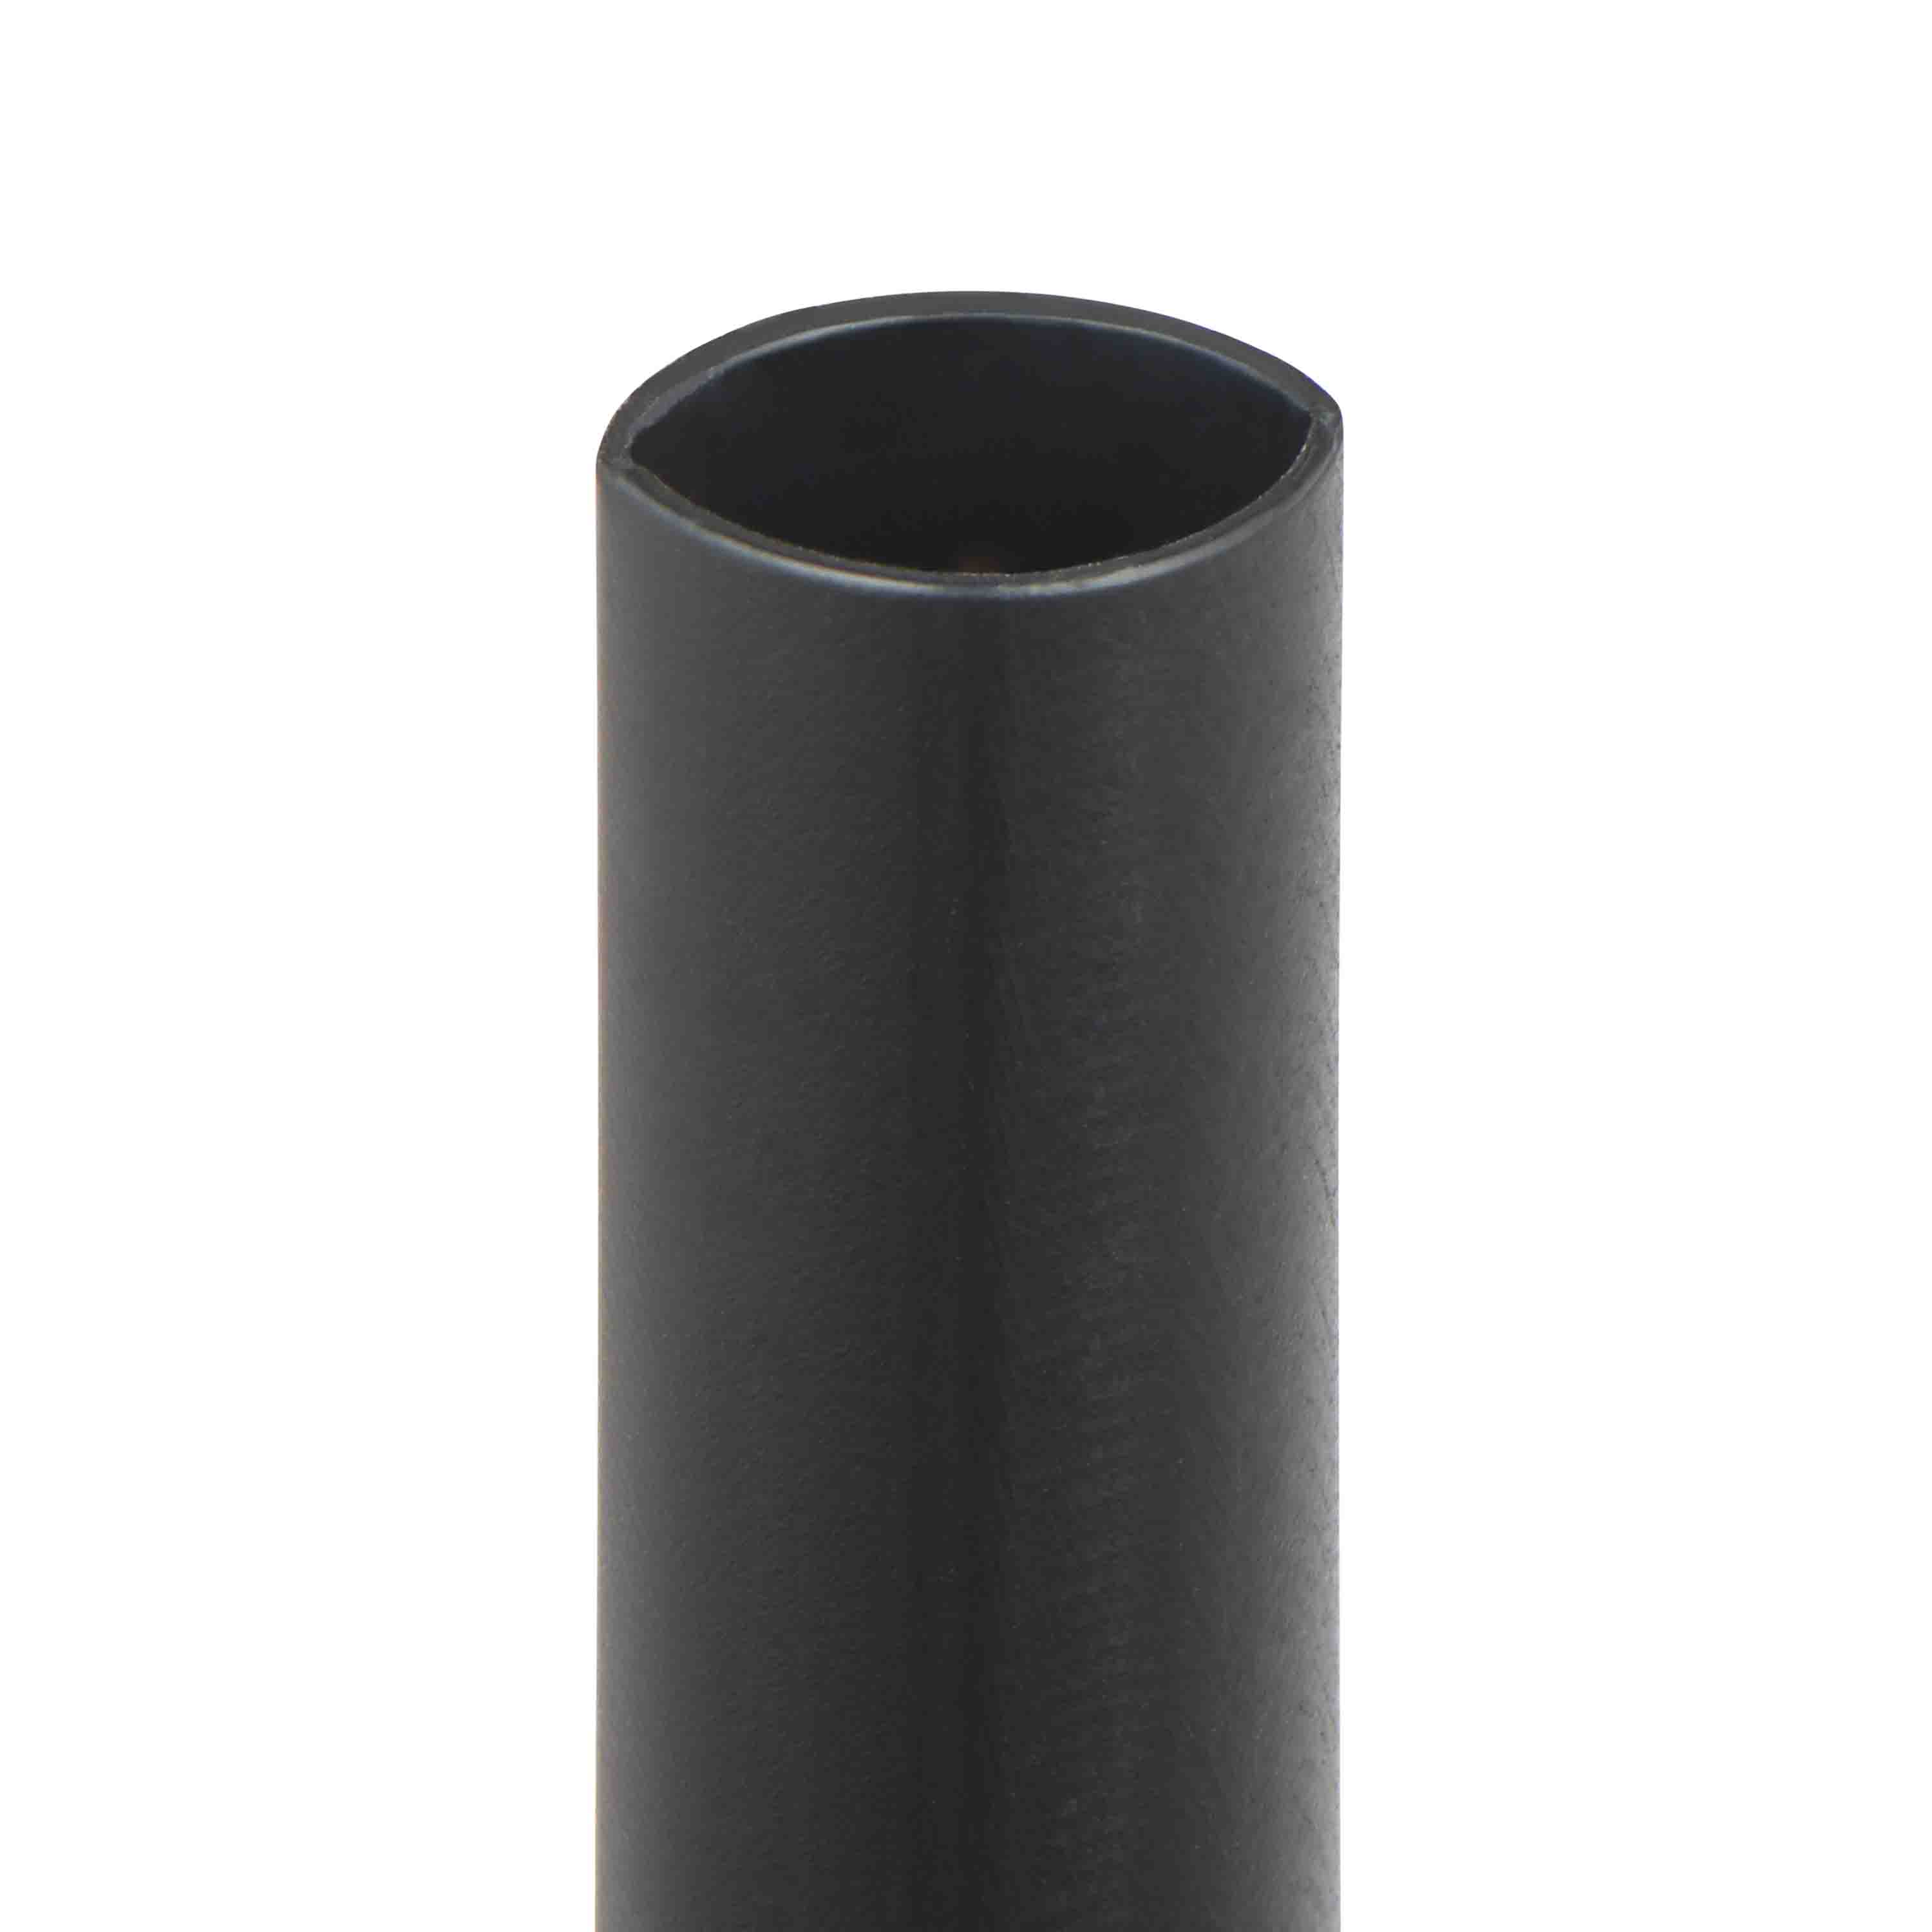 Tubo termorretráctil 3M de Poliolefina Negro, contracción 4.5:1, Ø 19mm, long. 1m, forrado con adhesivo